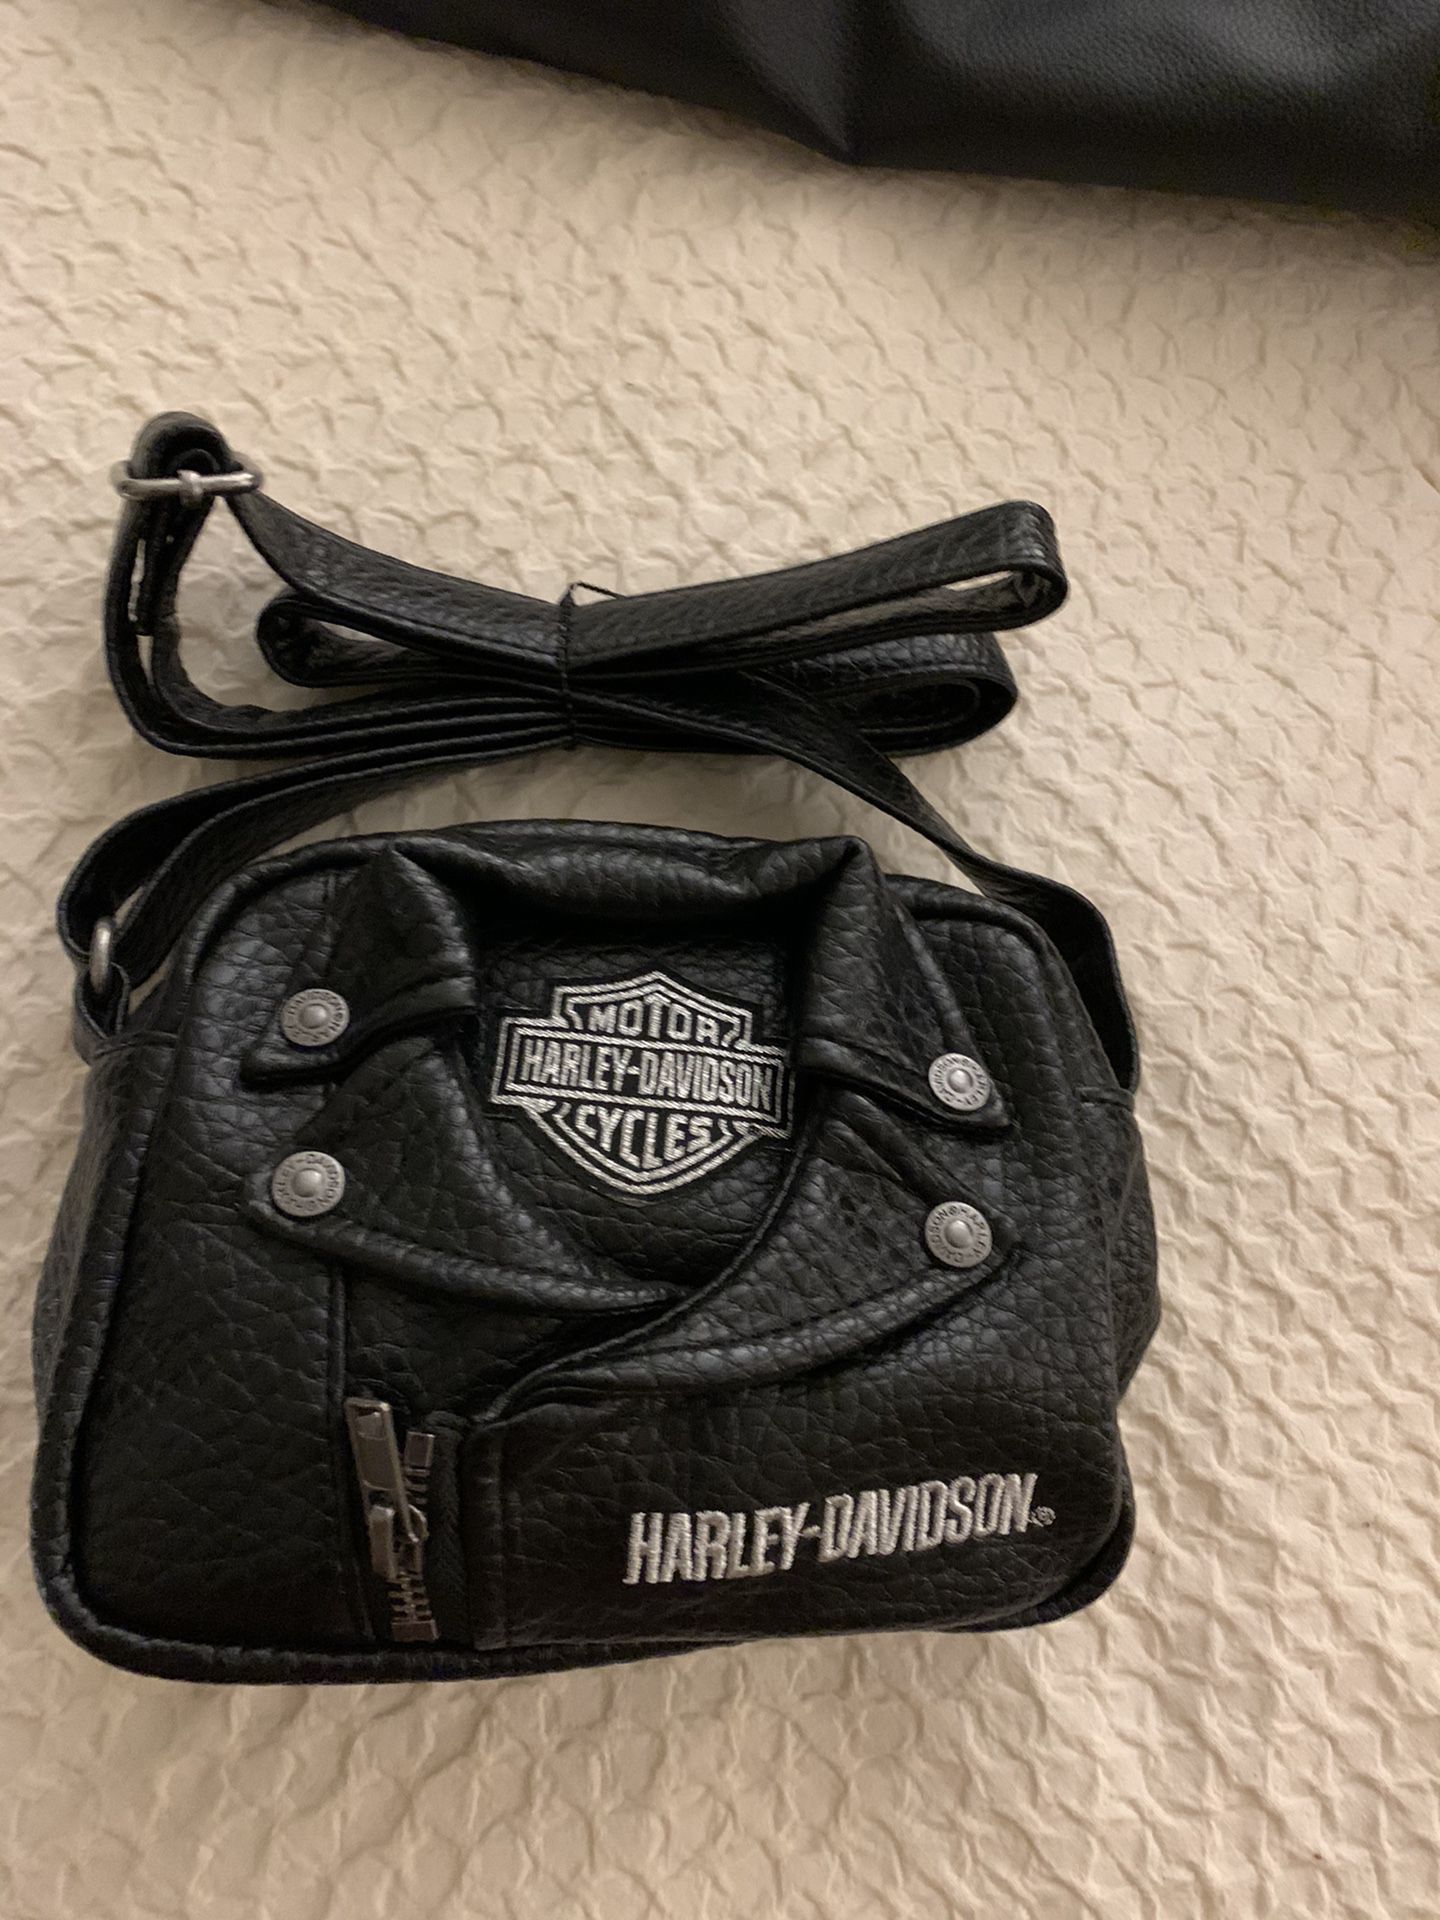 Harley Davidson crossbody bag